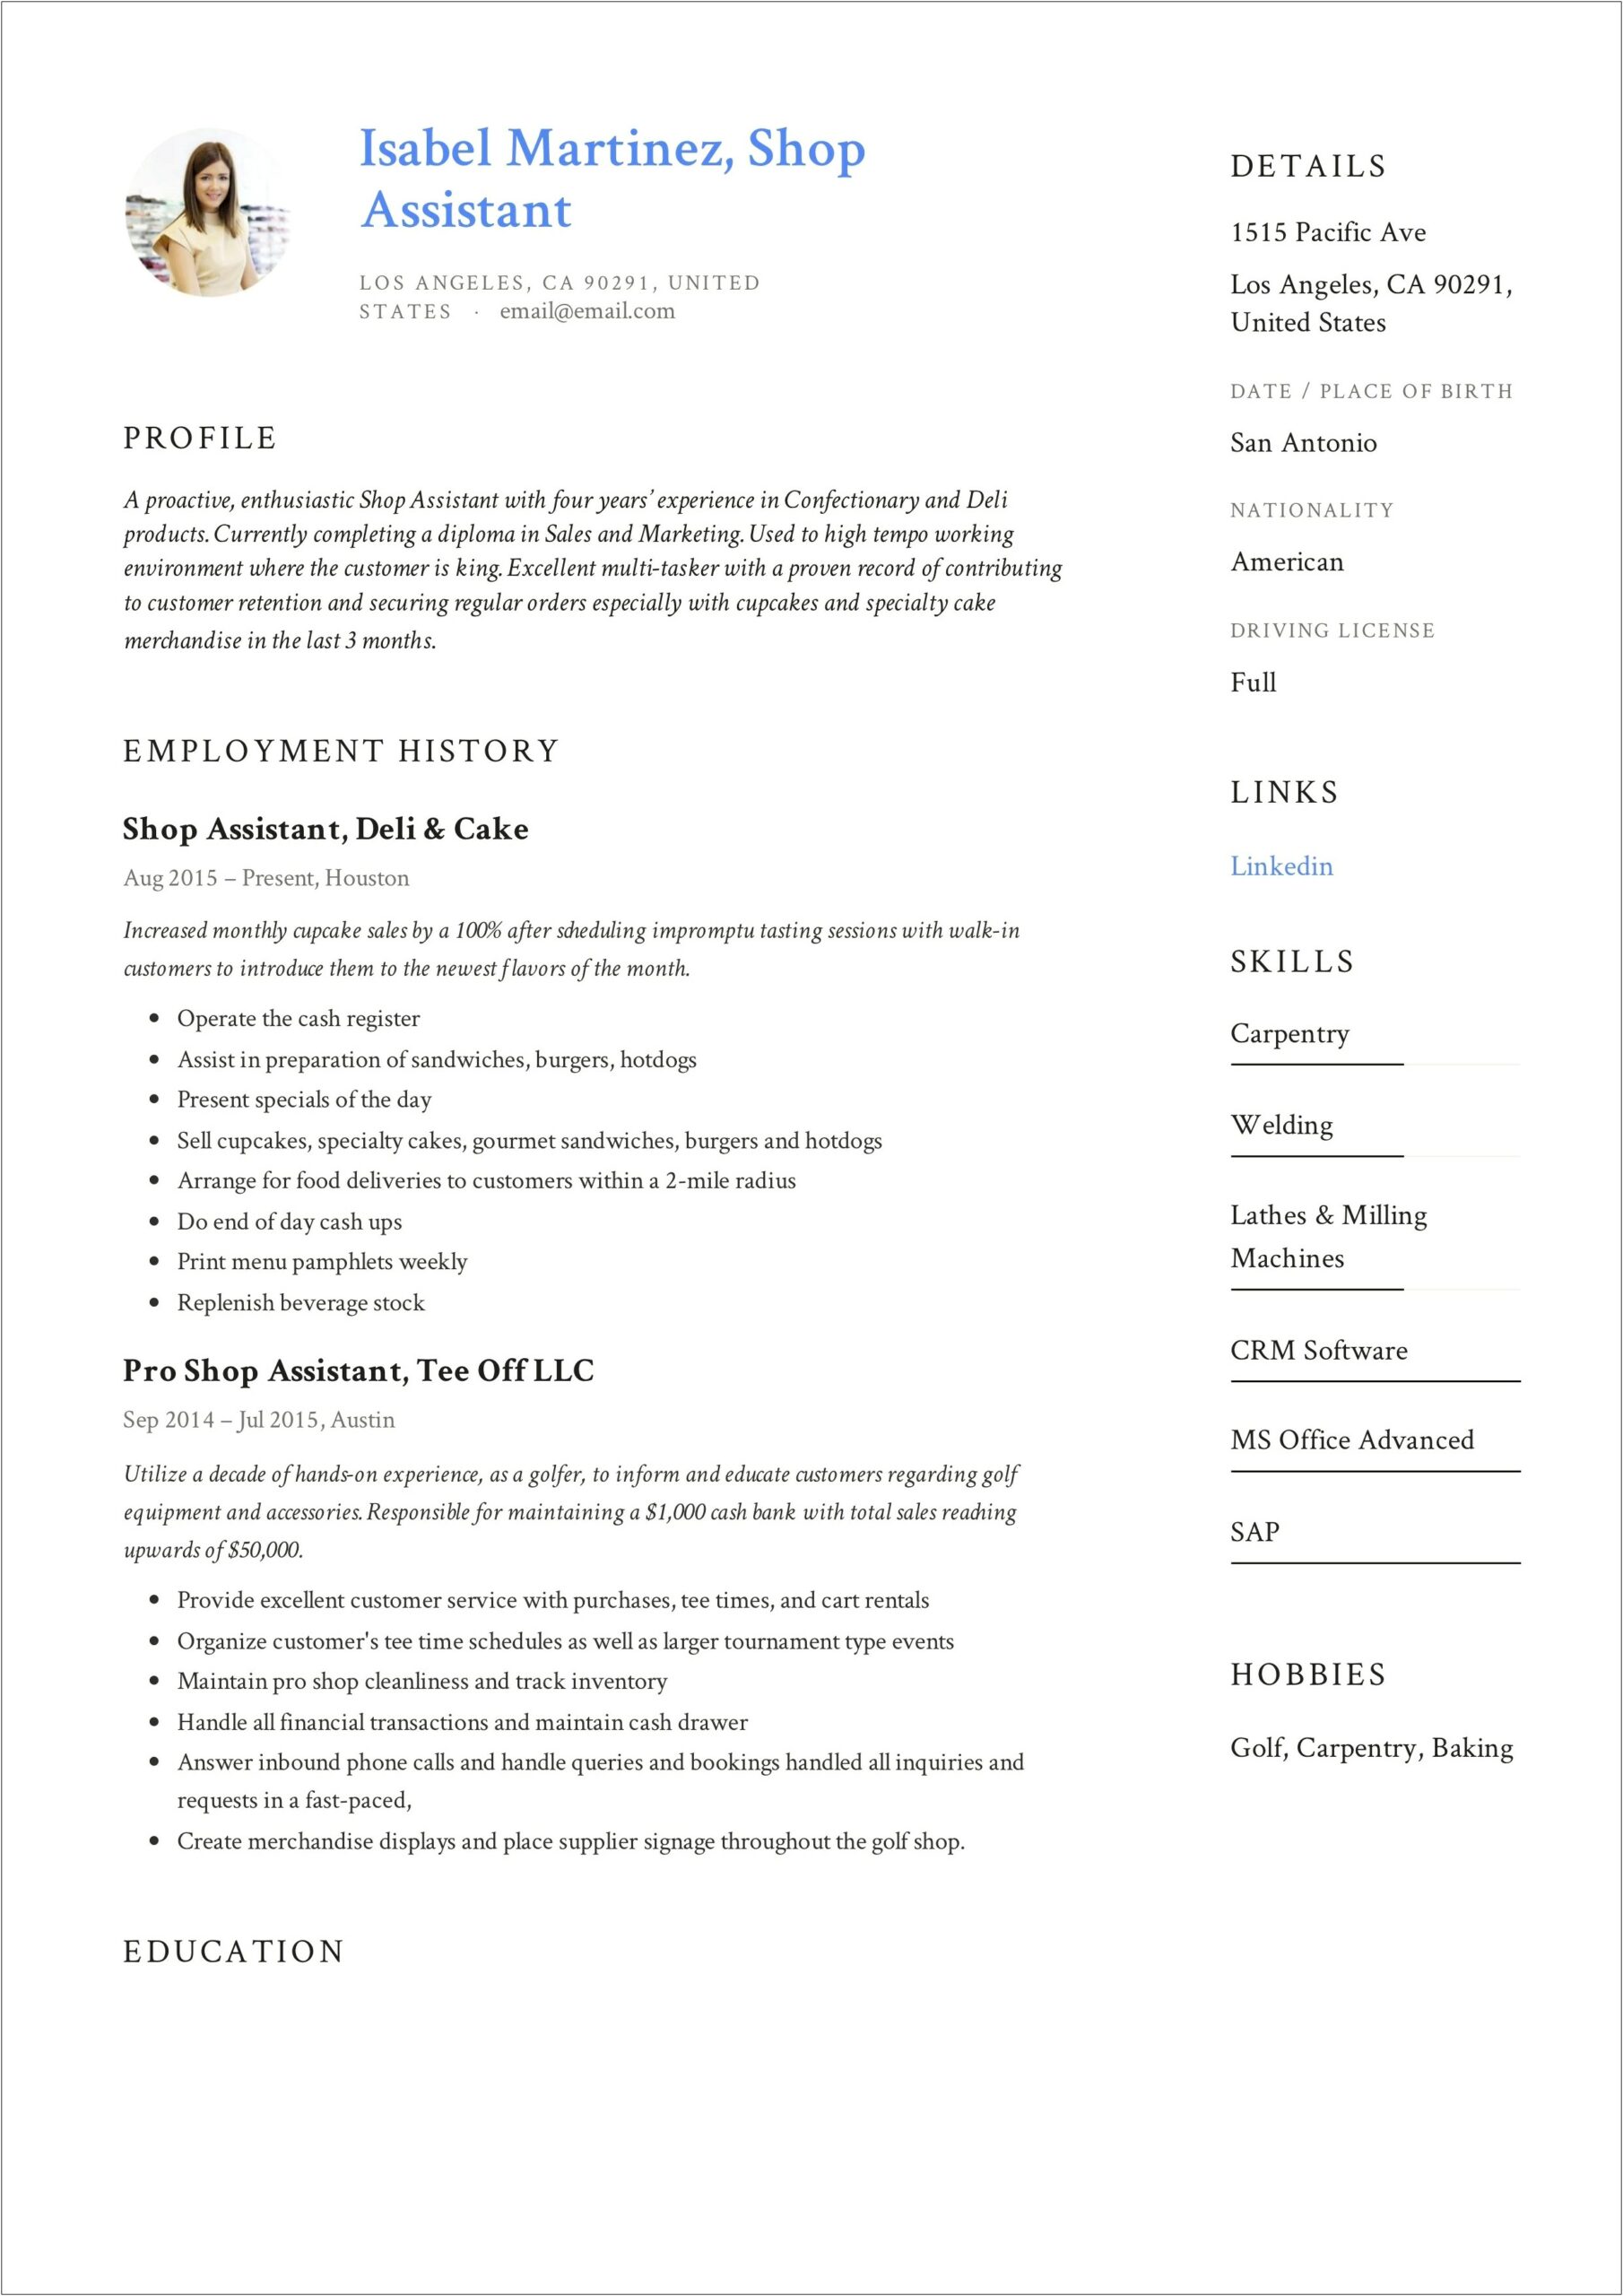 Resume Summary For Mall Job